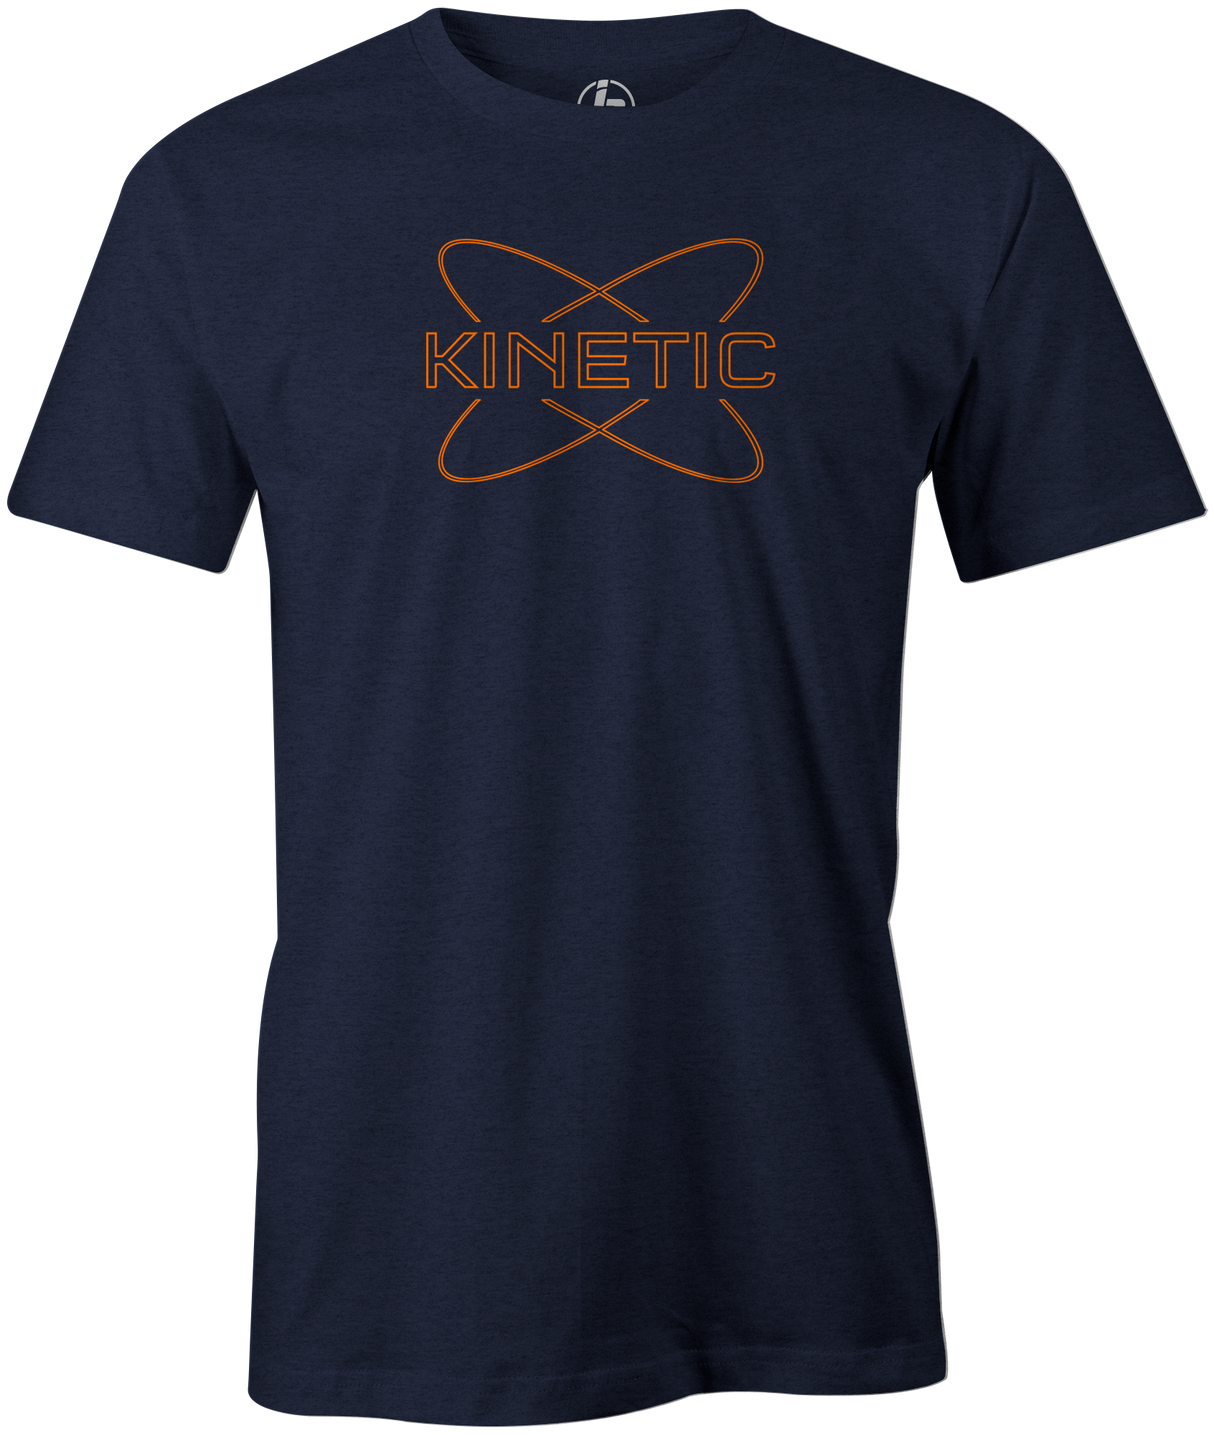 Kinetic Men's T-Shirt, Navy, bowling, bowling ball, track bowling, smart bowling, tshirt, tee, tee-shirt, tee shirt